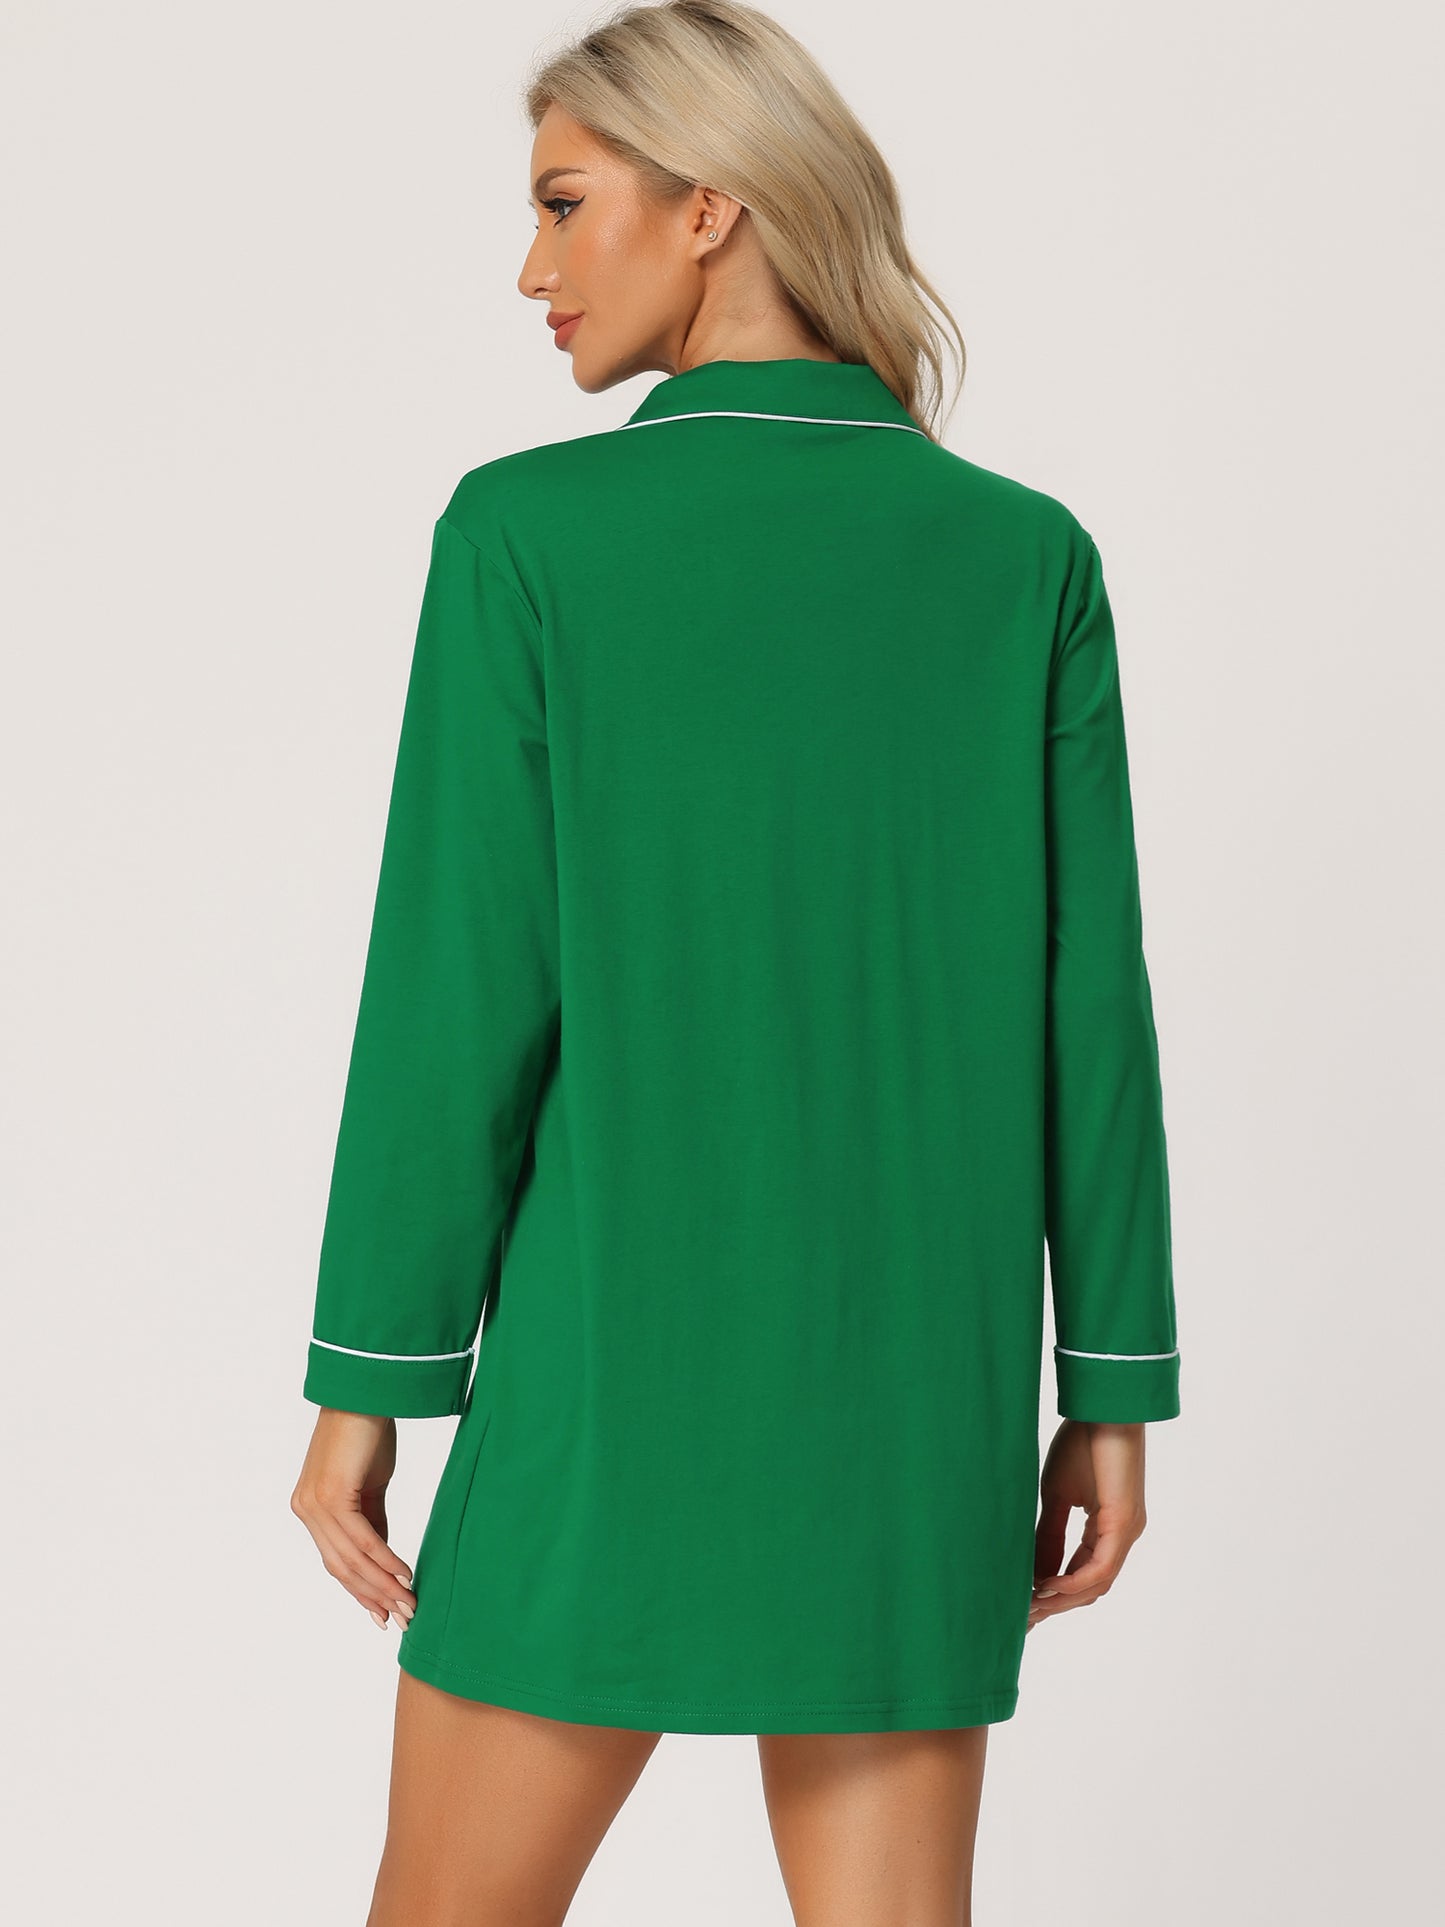 cheibear Pajamas Nightshirt Short Sleeves Button Down Shirt Dress Green